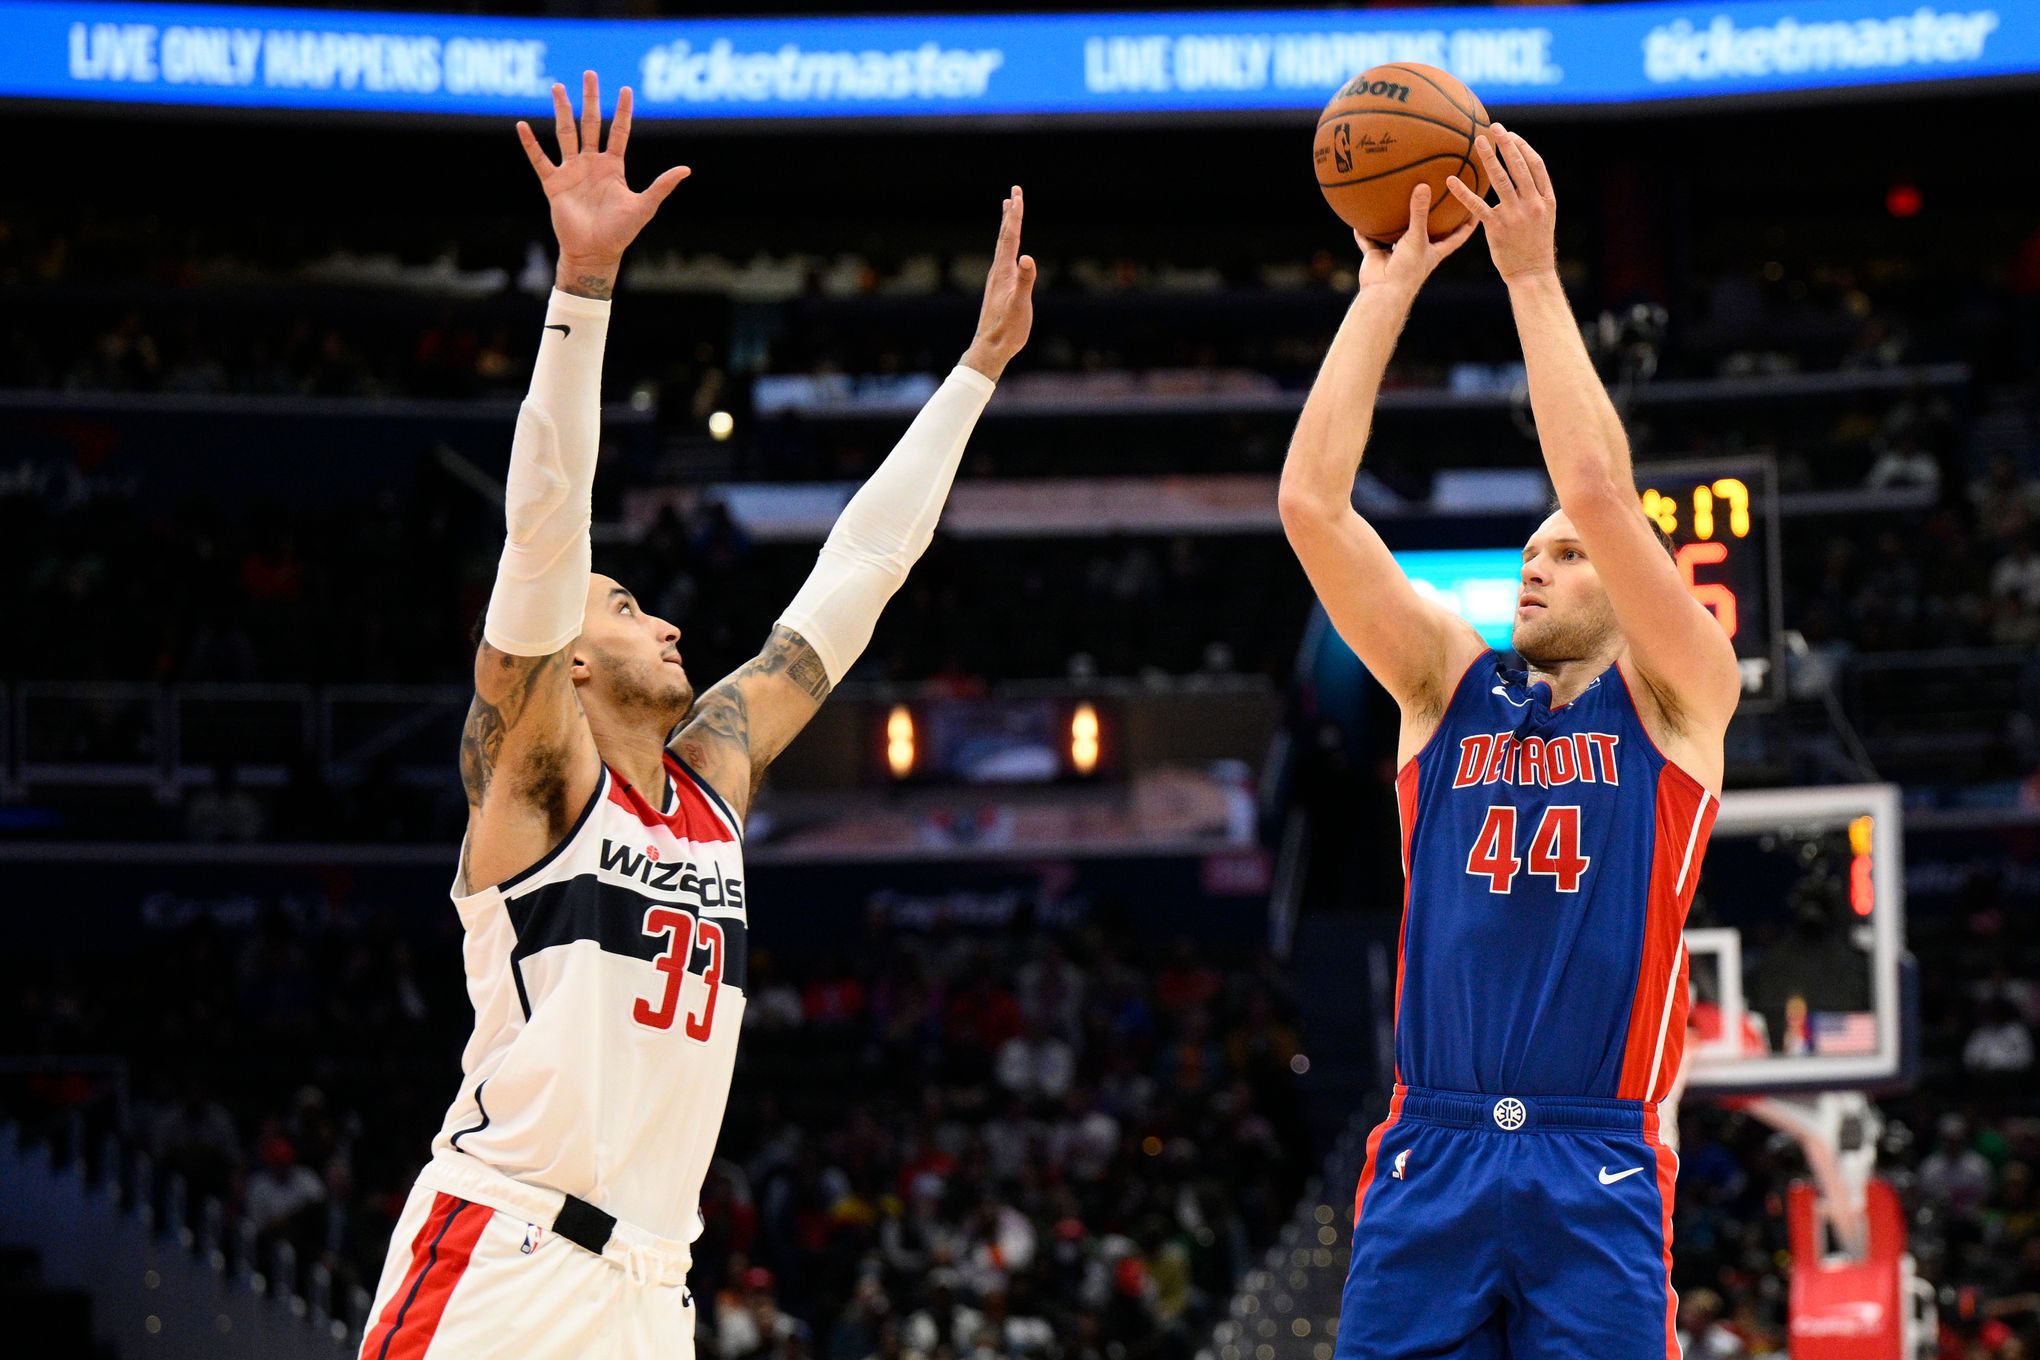 NBA News Involving Bogdanovic, Washington, and Vezenkov